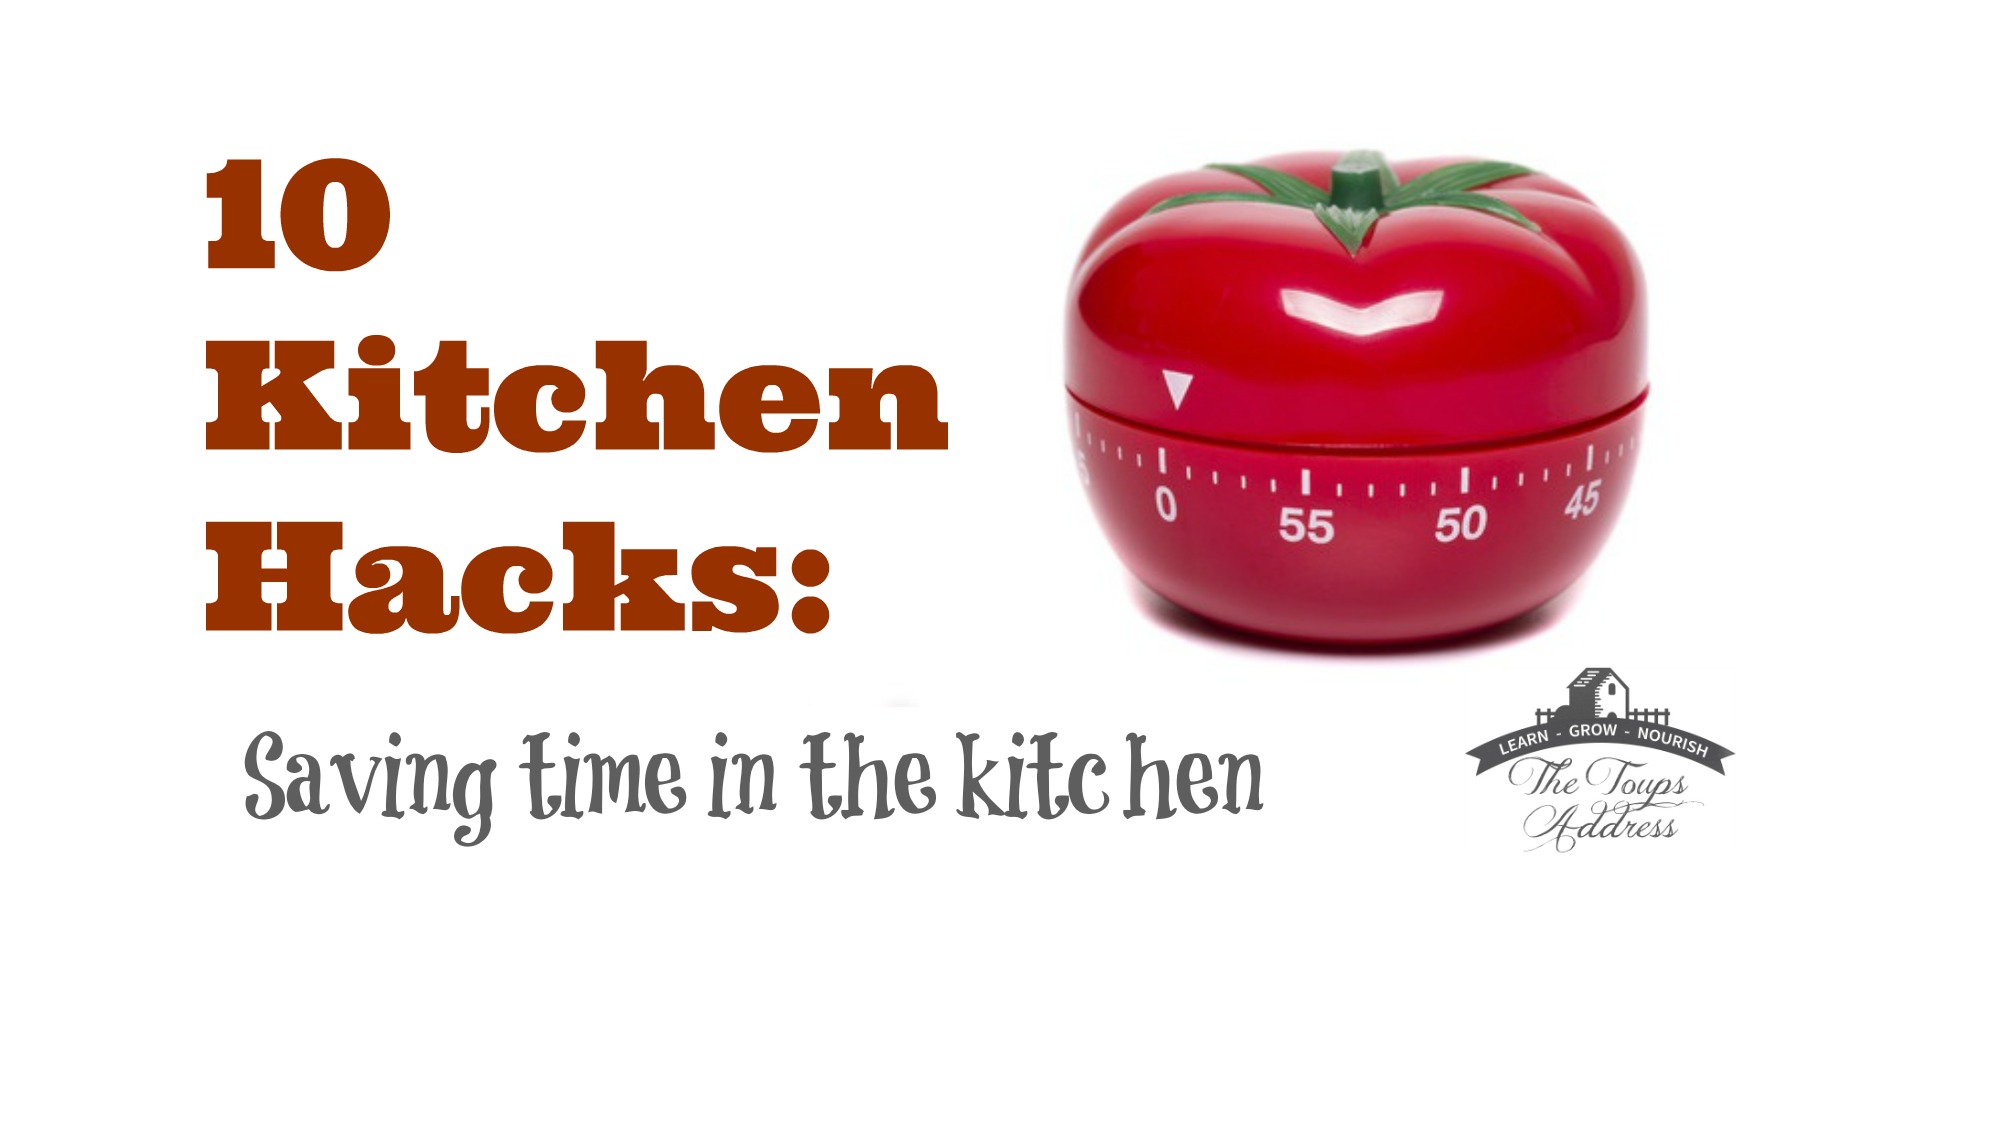 10 Kitchen Hacks: Saving time in the kitchen - The Toups Address